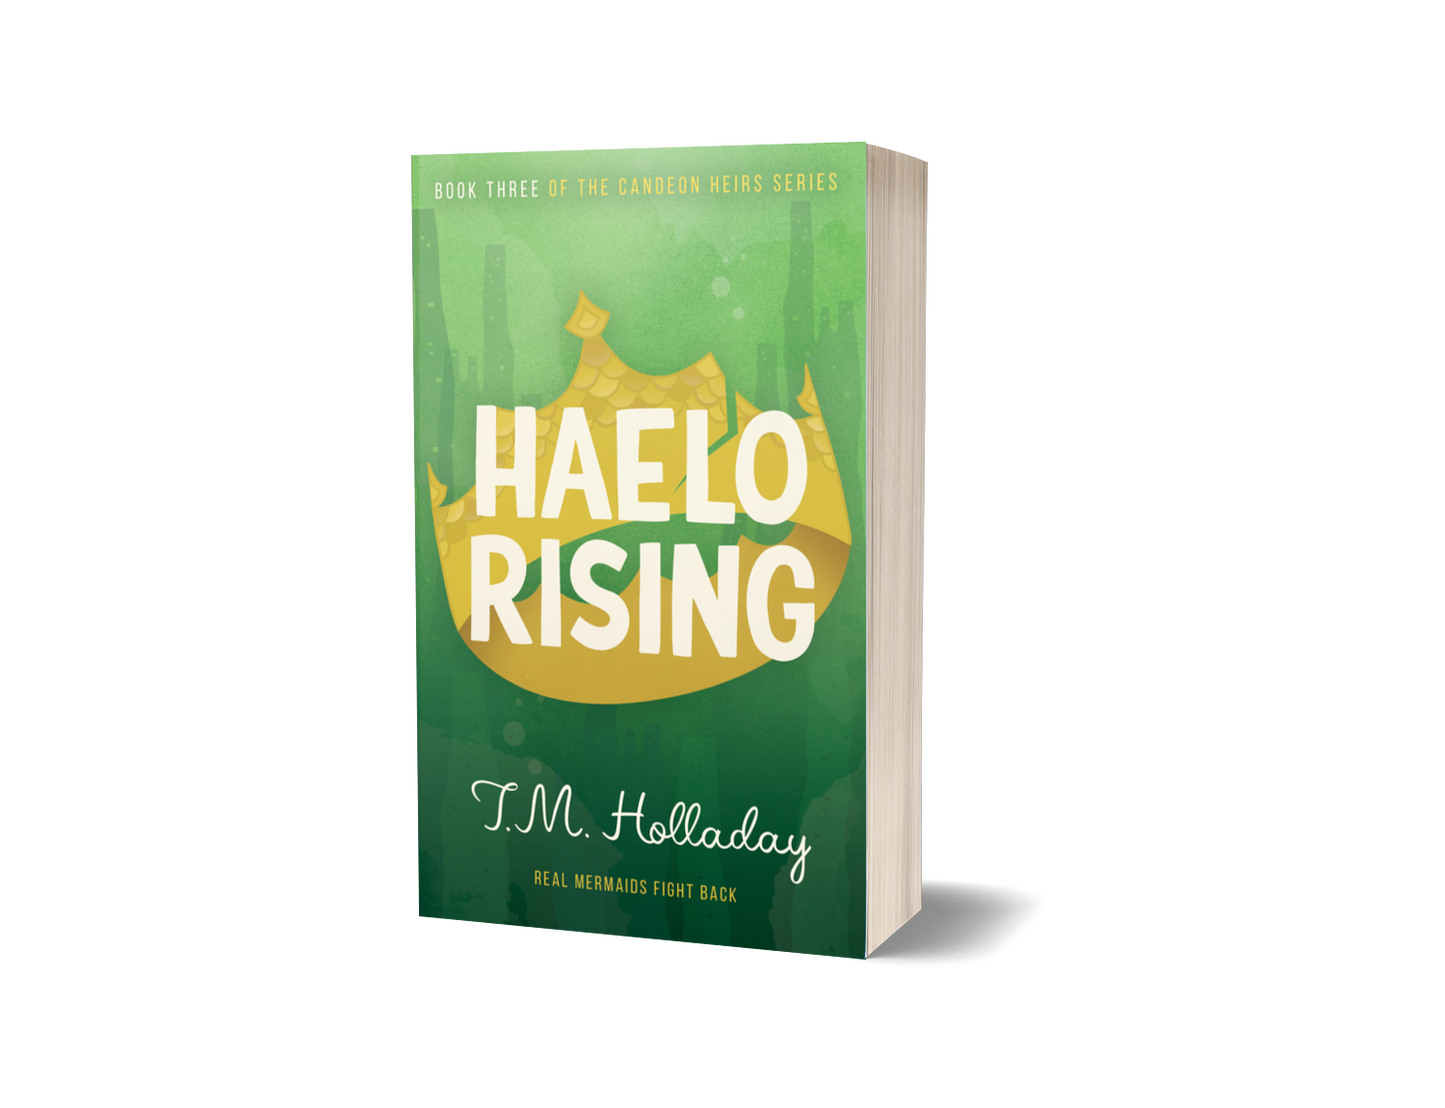 Haelo Rising - First Edition